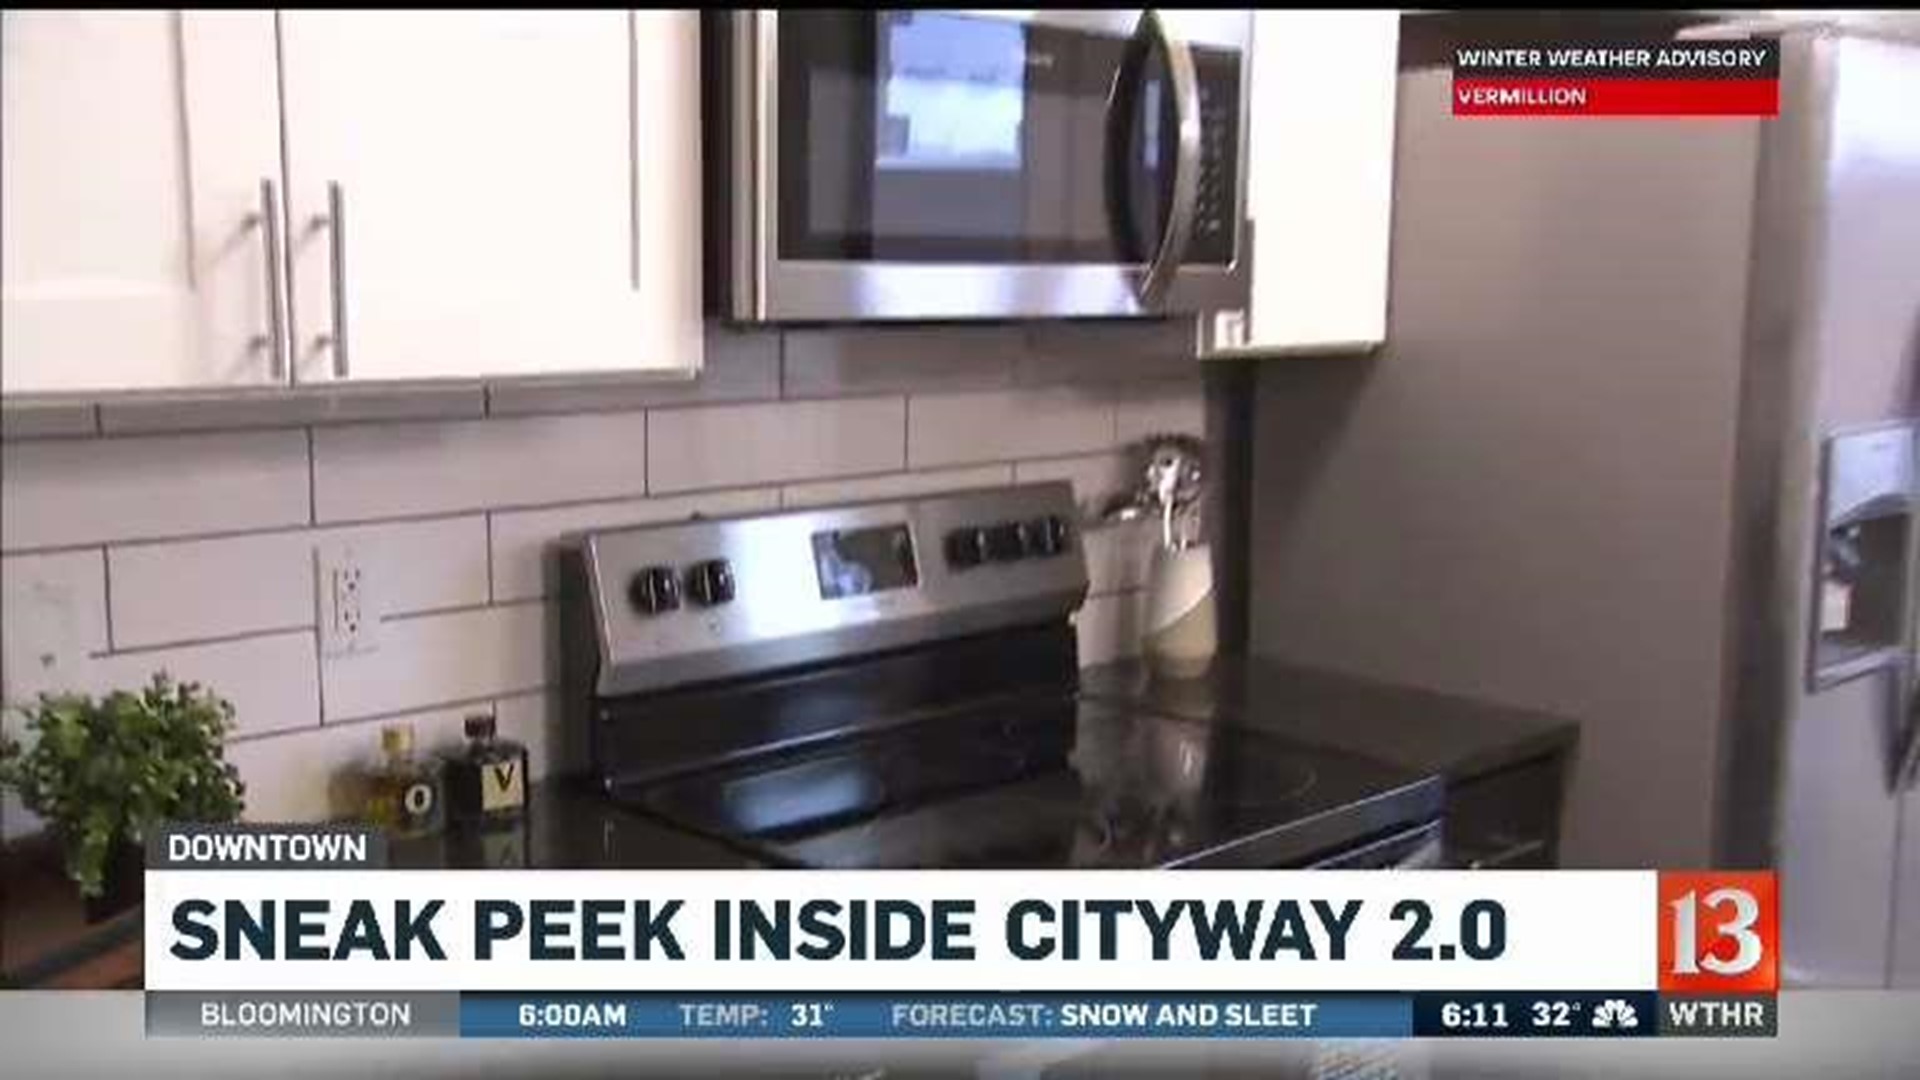 Sneak peek at City Way 2.0